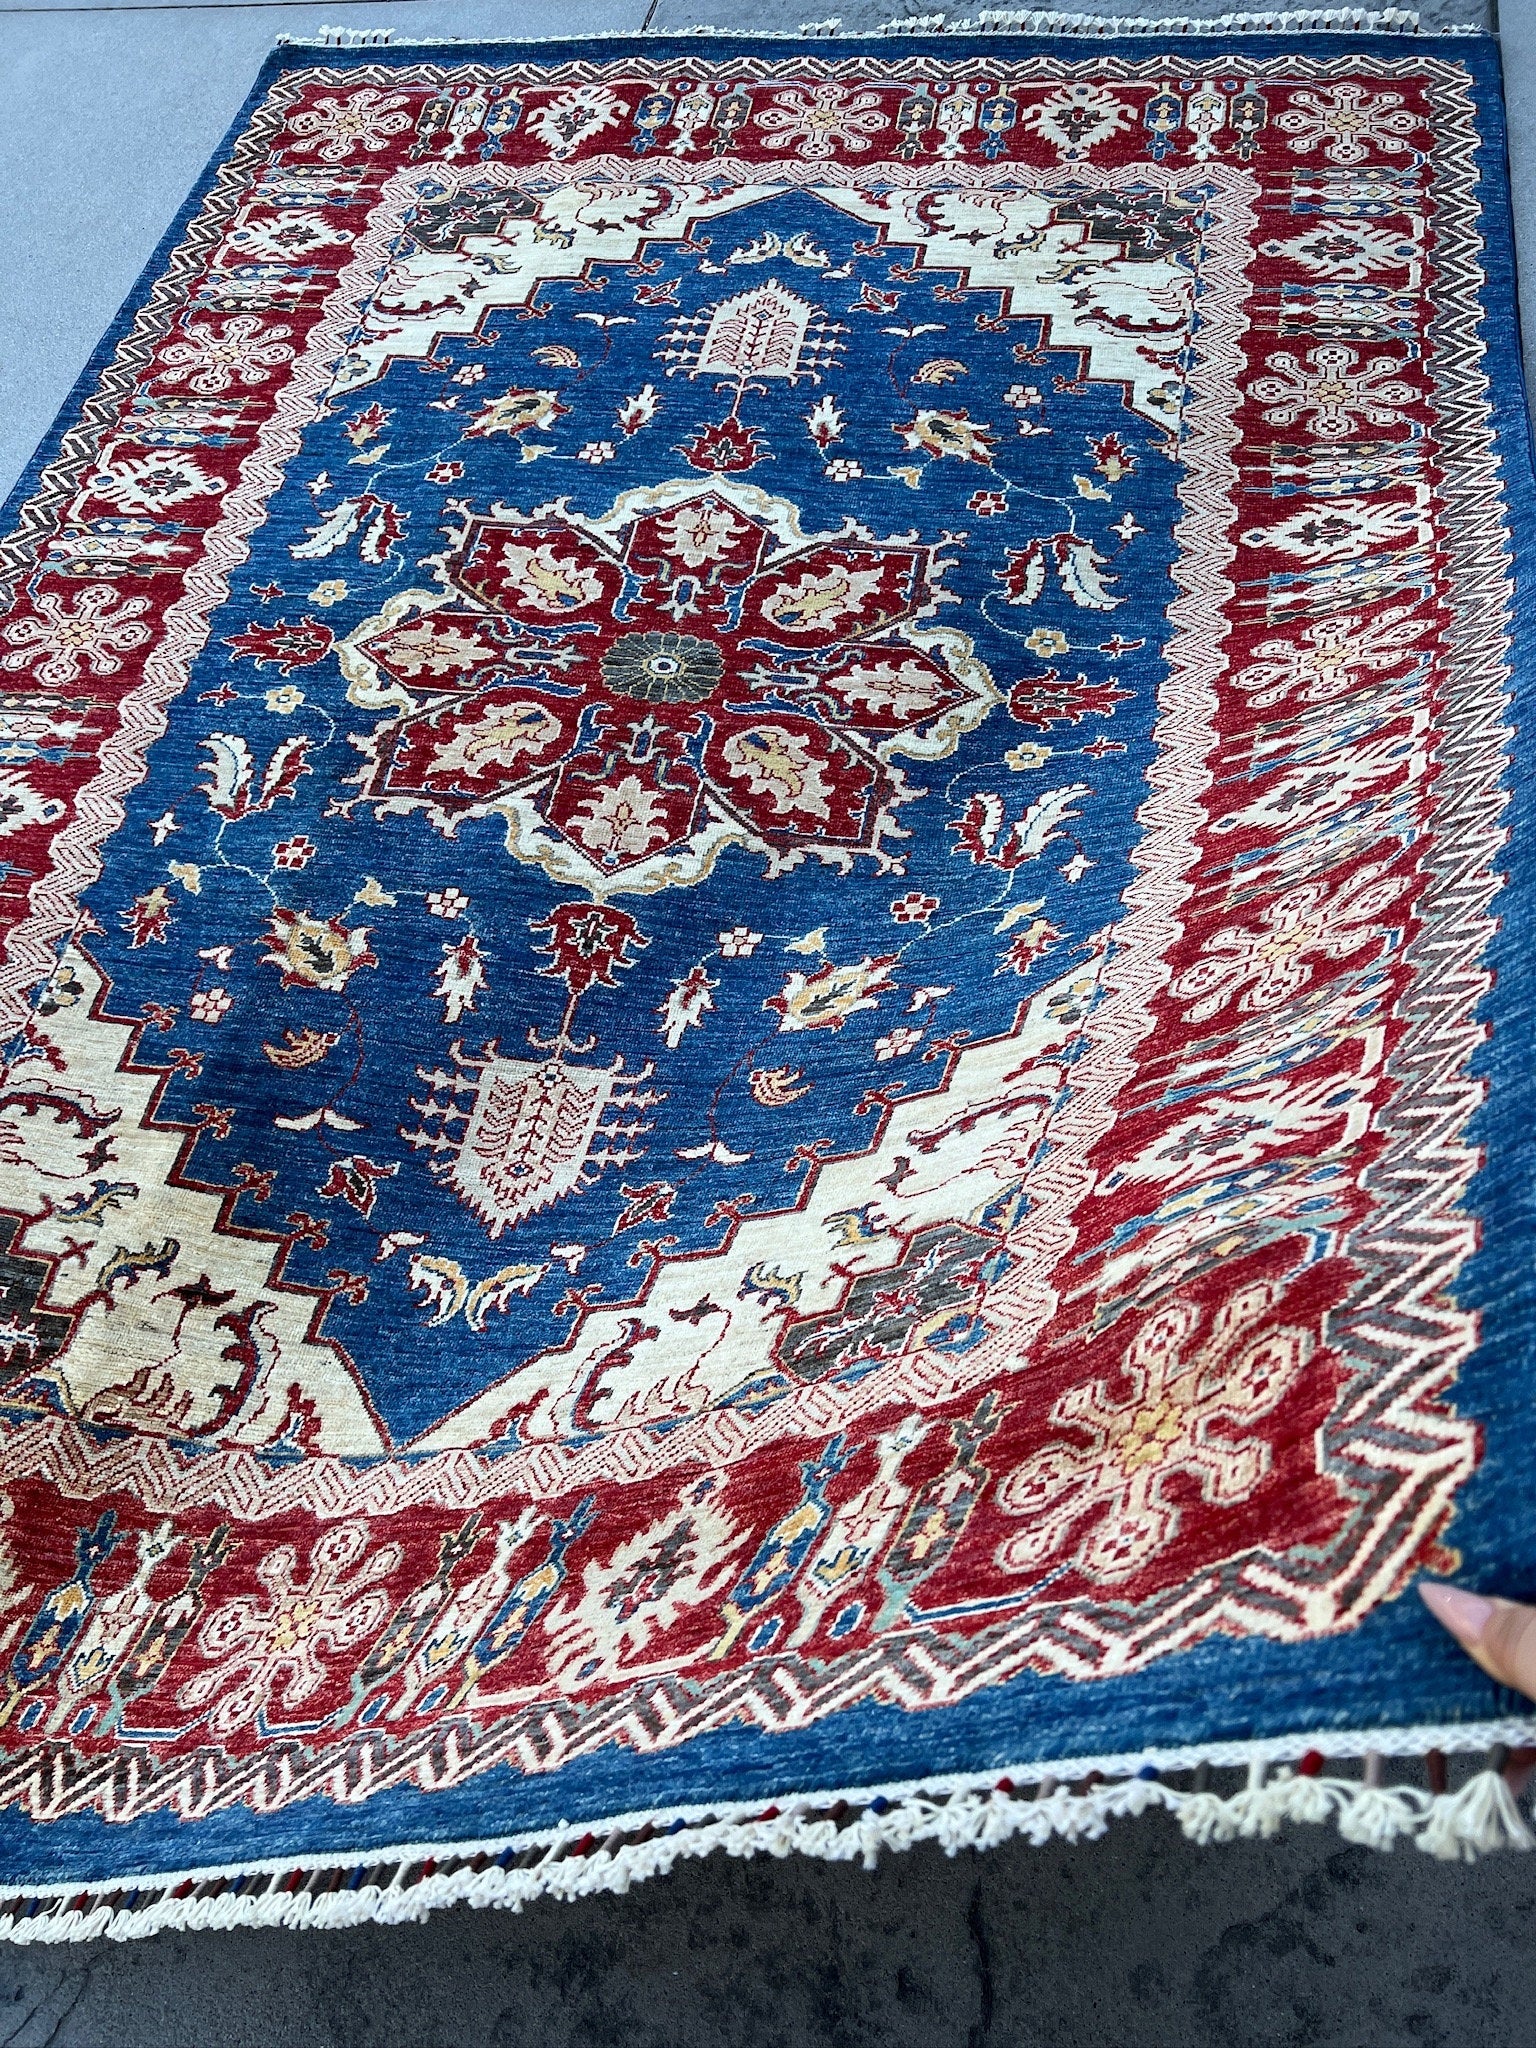 6x8 (180x245) Handmade Afghan Rug | Royal Sky Blue Crimson Red Cream White Ivory Golden Yellow Salmon Charcoal | Wool Heriz Persian Floral